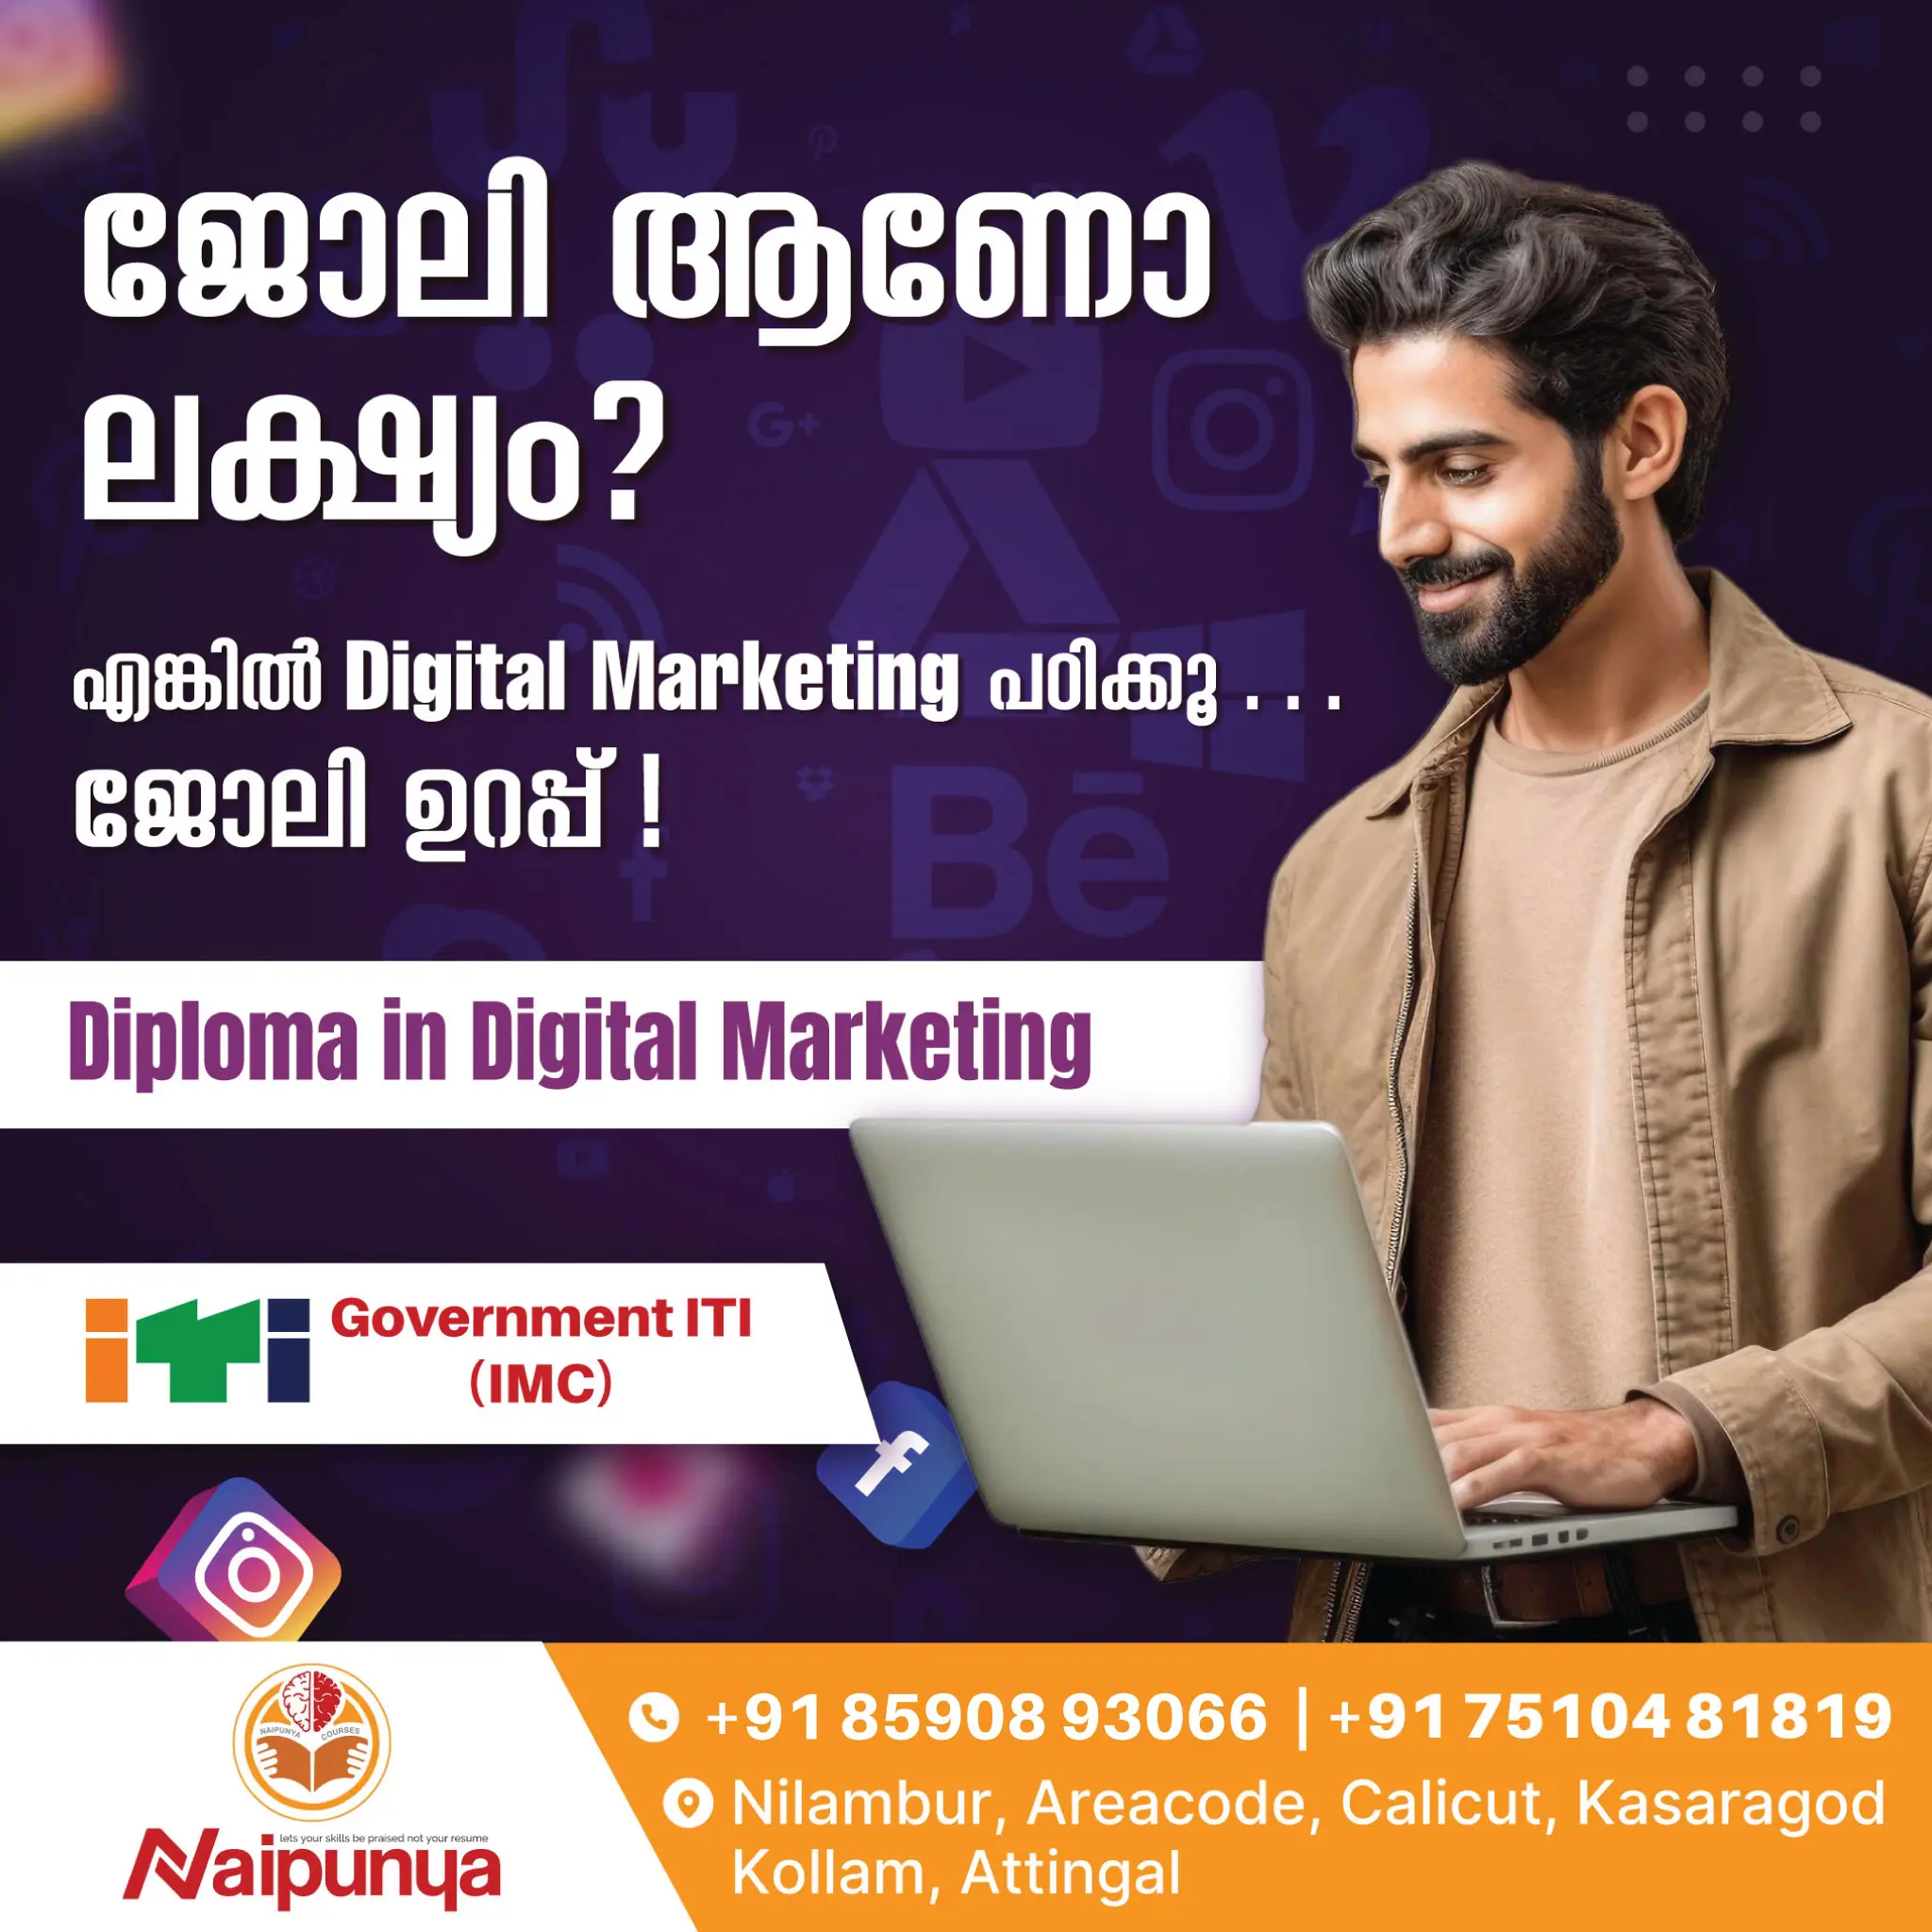 Become a Digital Marketing Expert. Enroll now! 